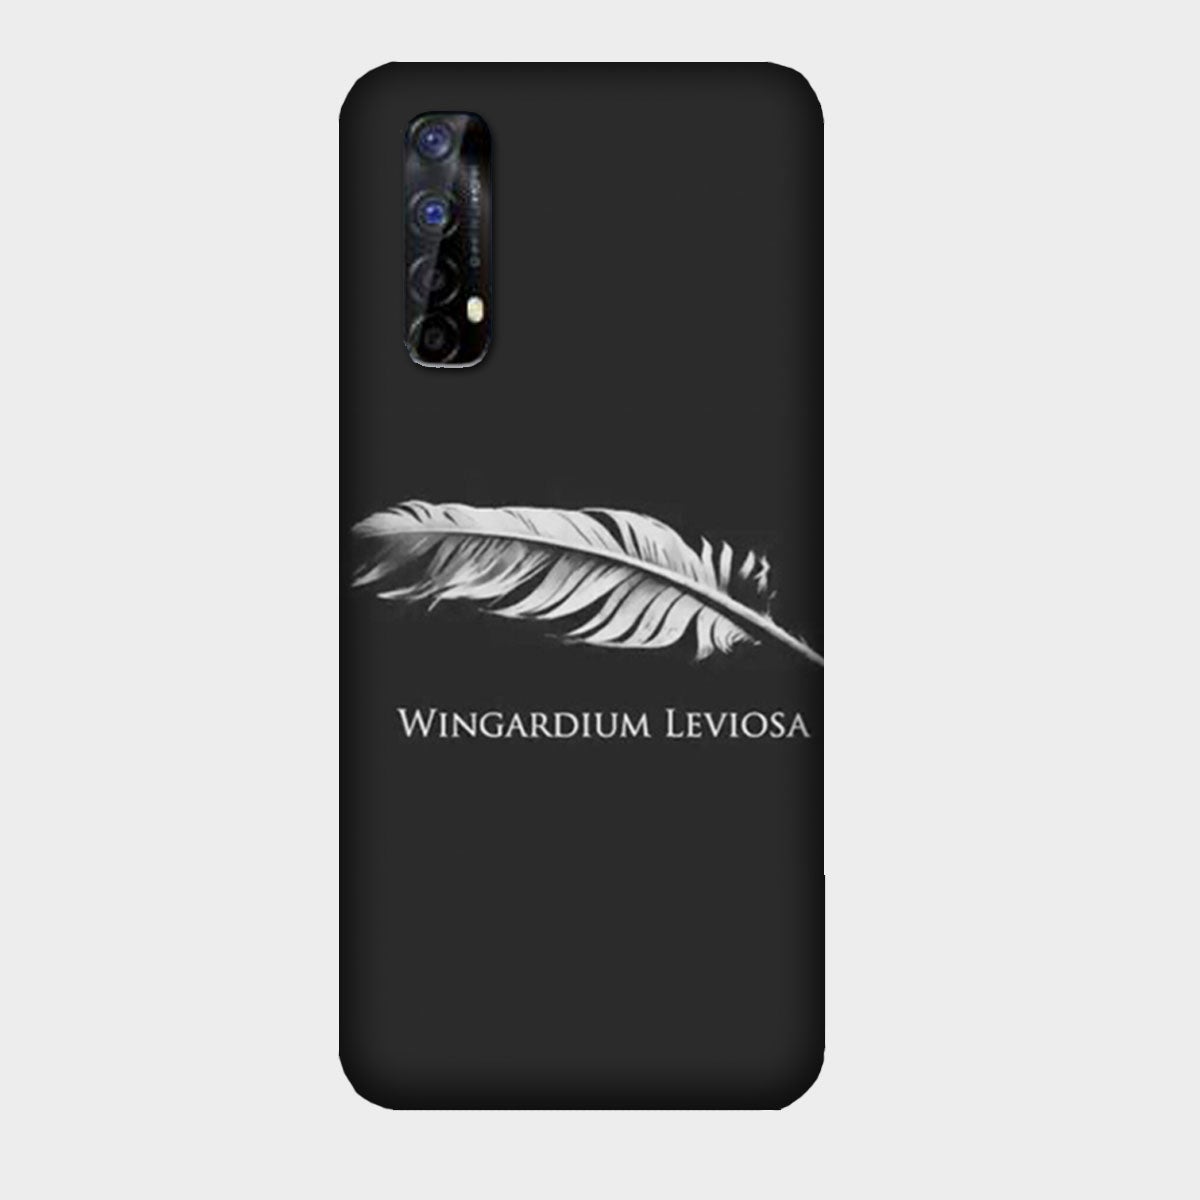 Harry Potter - Wingardium Leviosa - Mobile Phone Cover - Hard Case